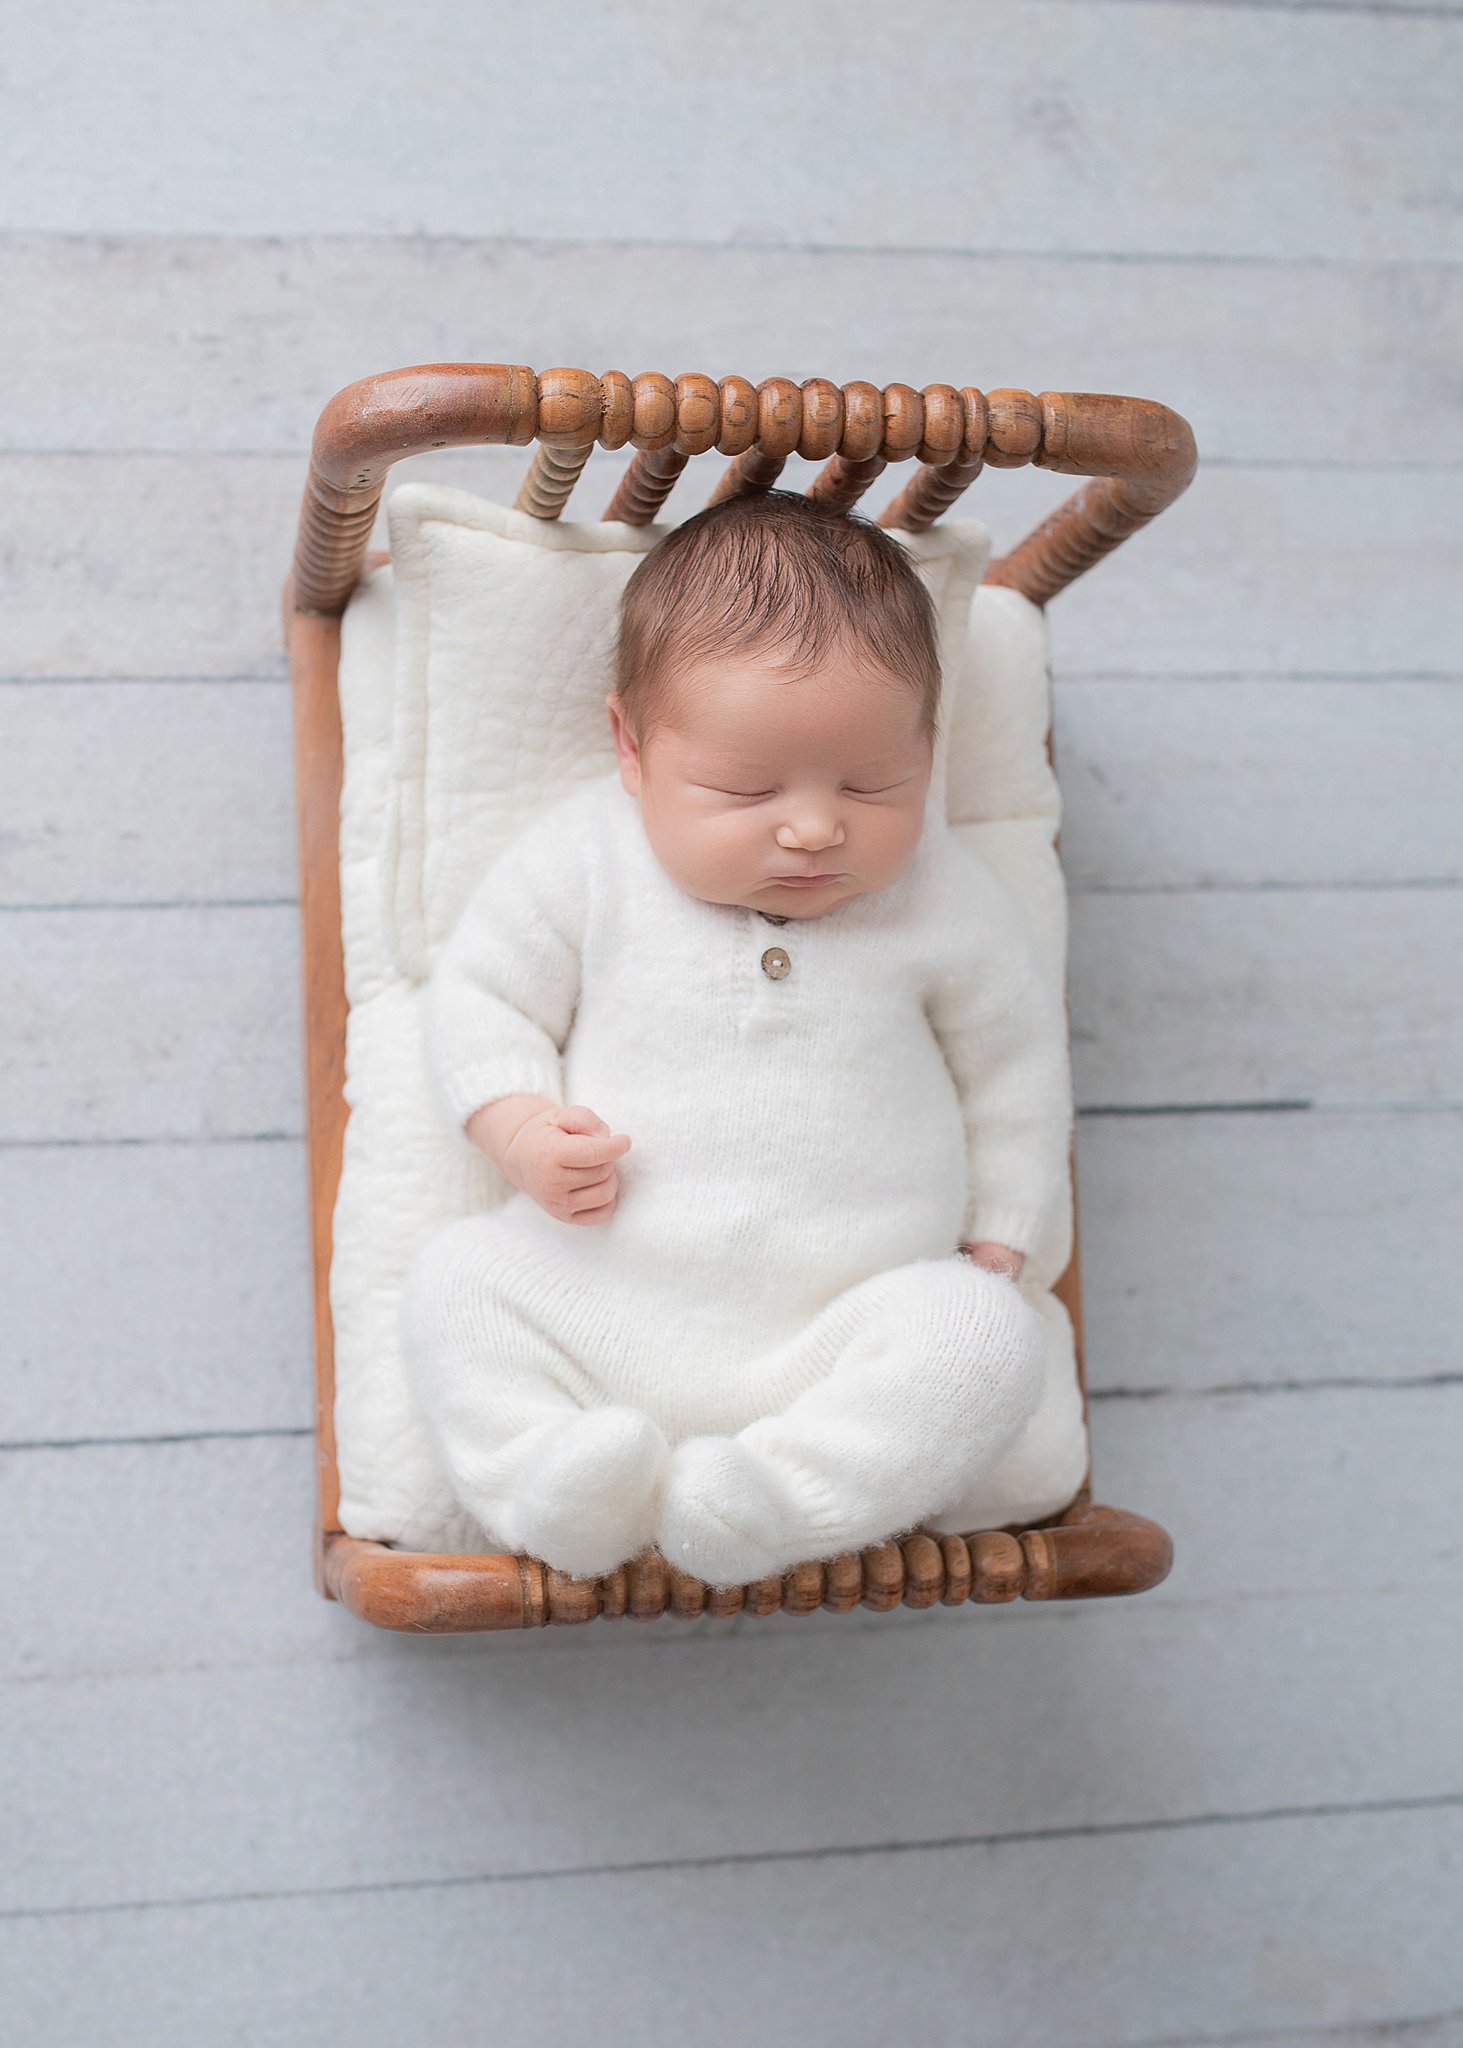 newborn baby sleeps in a wooden bed wearing a white onesie baby furniture stores in Houston